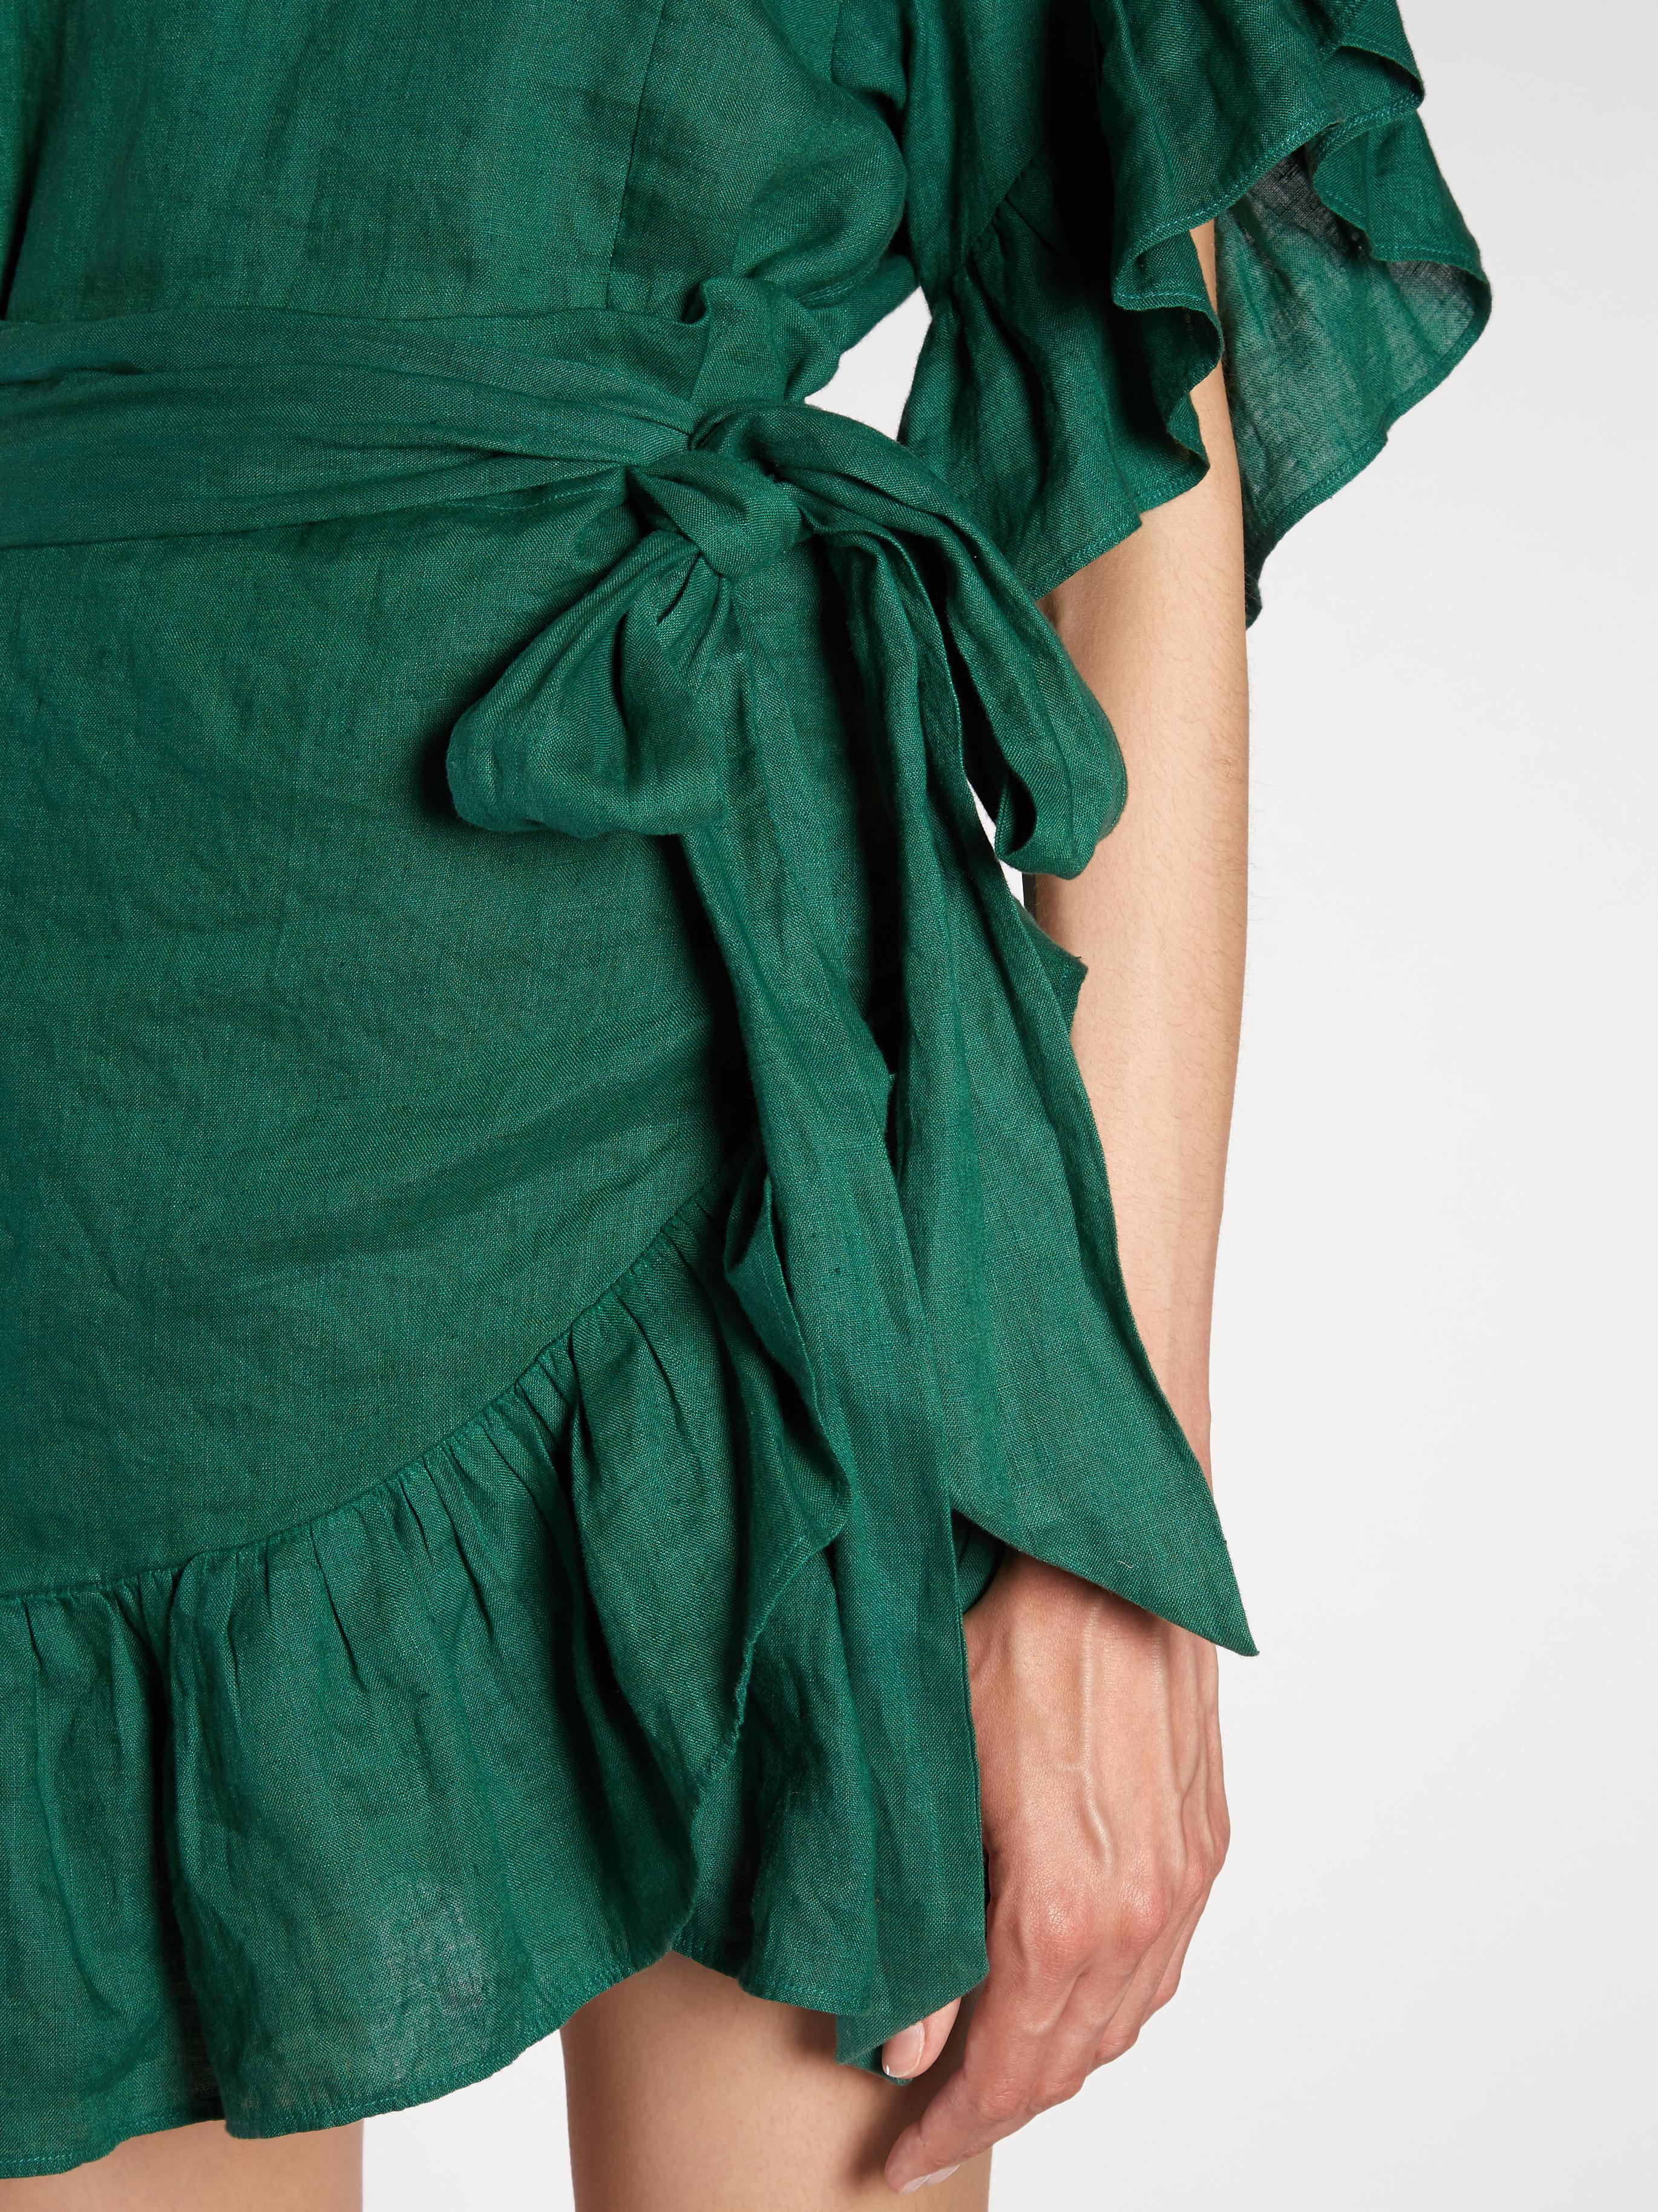 Étoile Marant Delicia Linen Dress in Green - Lyst